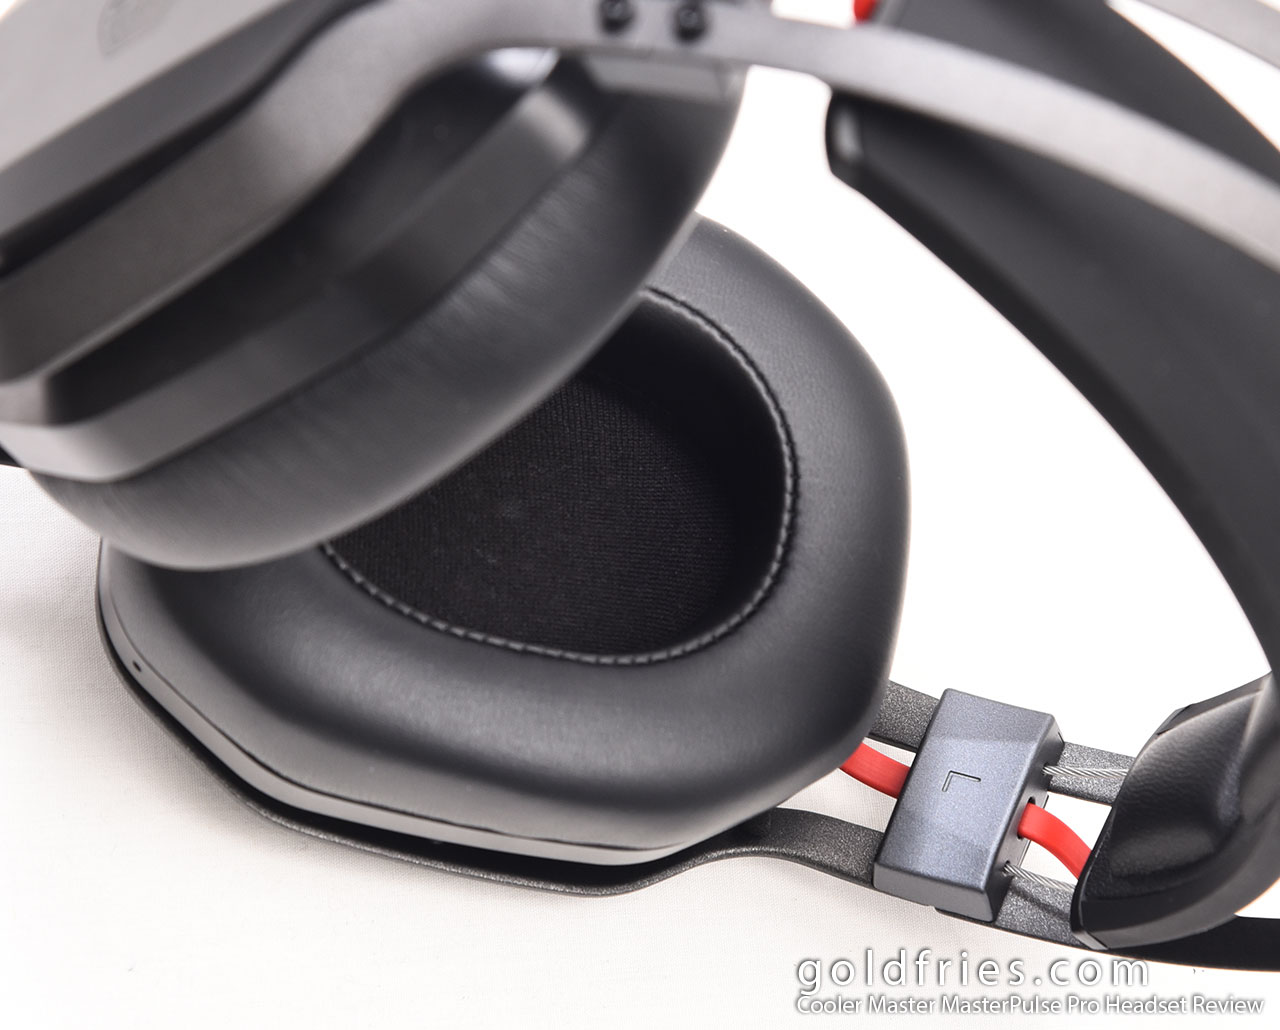 Cooler Master MasterPulse Pro Headset Review